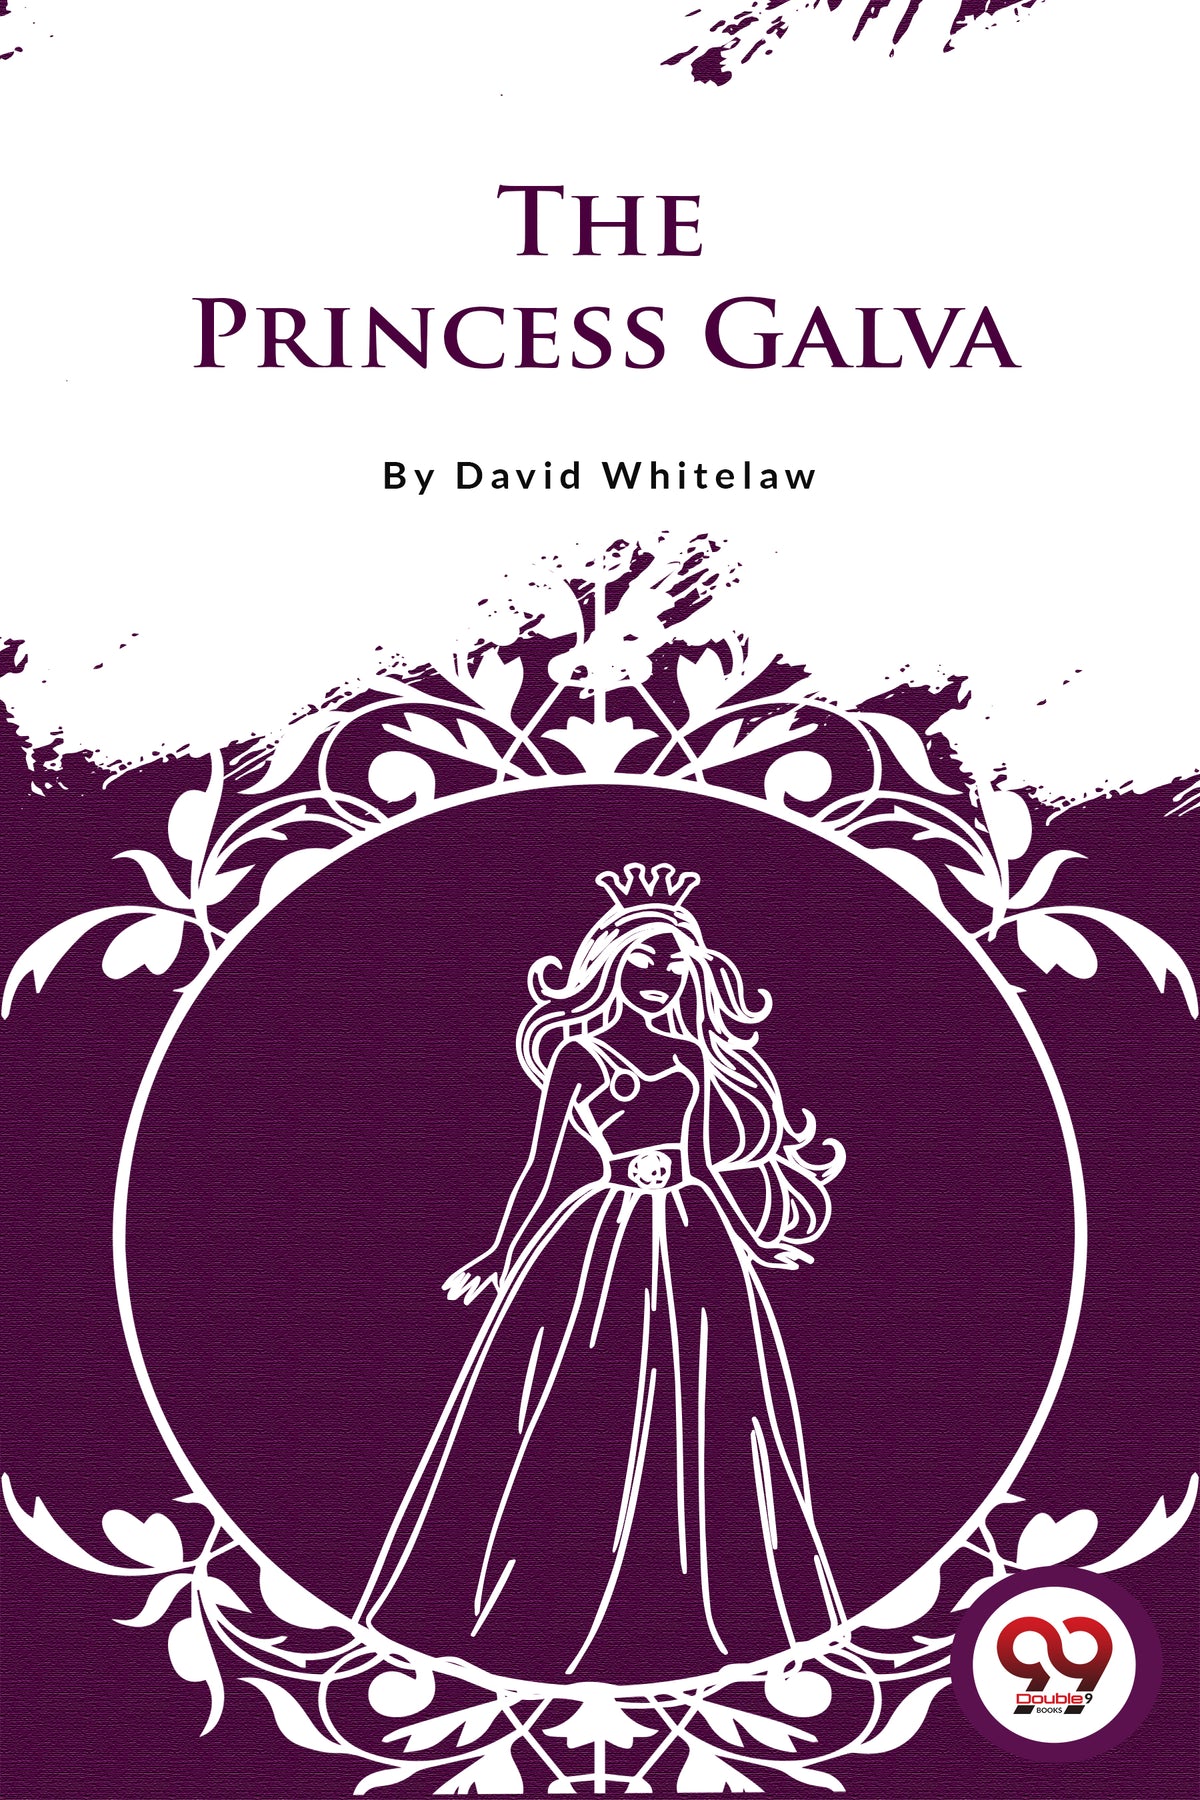 The Princess Galva